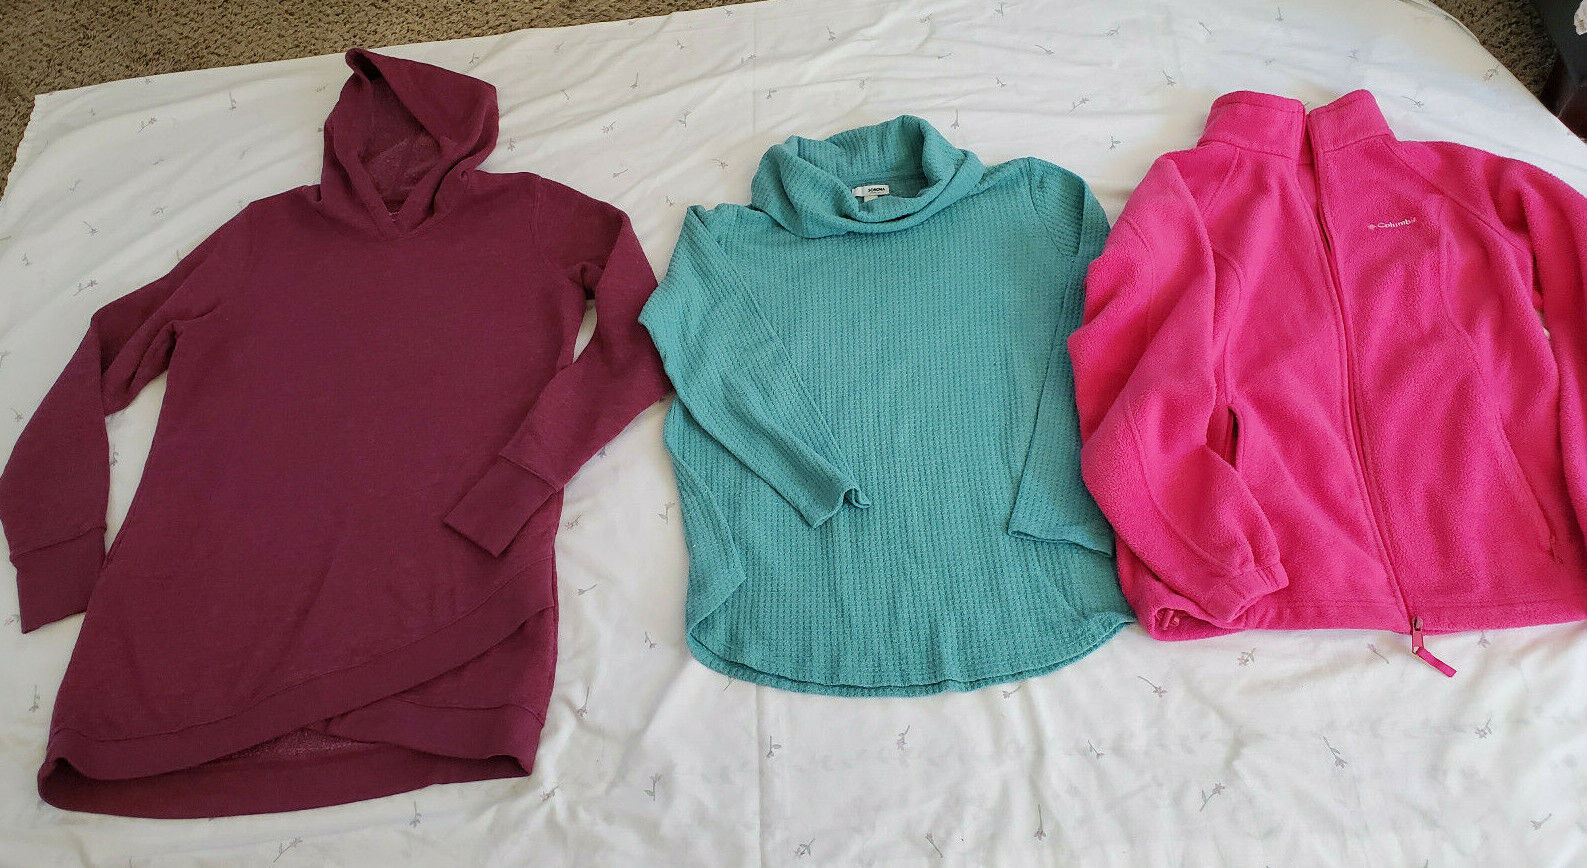 Ladies Thermal Top, Long Sweatshirt, Fleece Jacket Three Pieces All Sz Large Tek Gear, Sonoma, Columbia